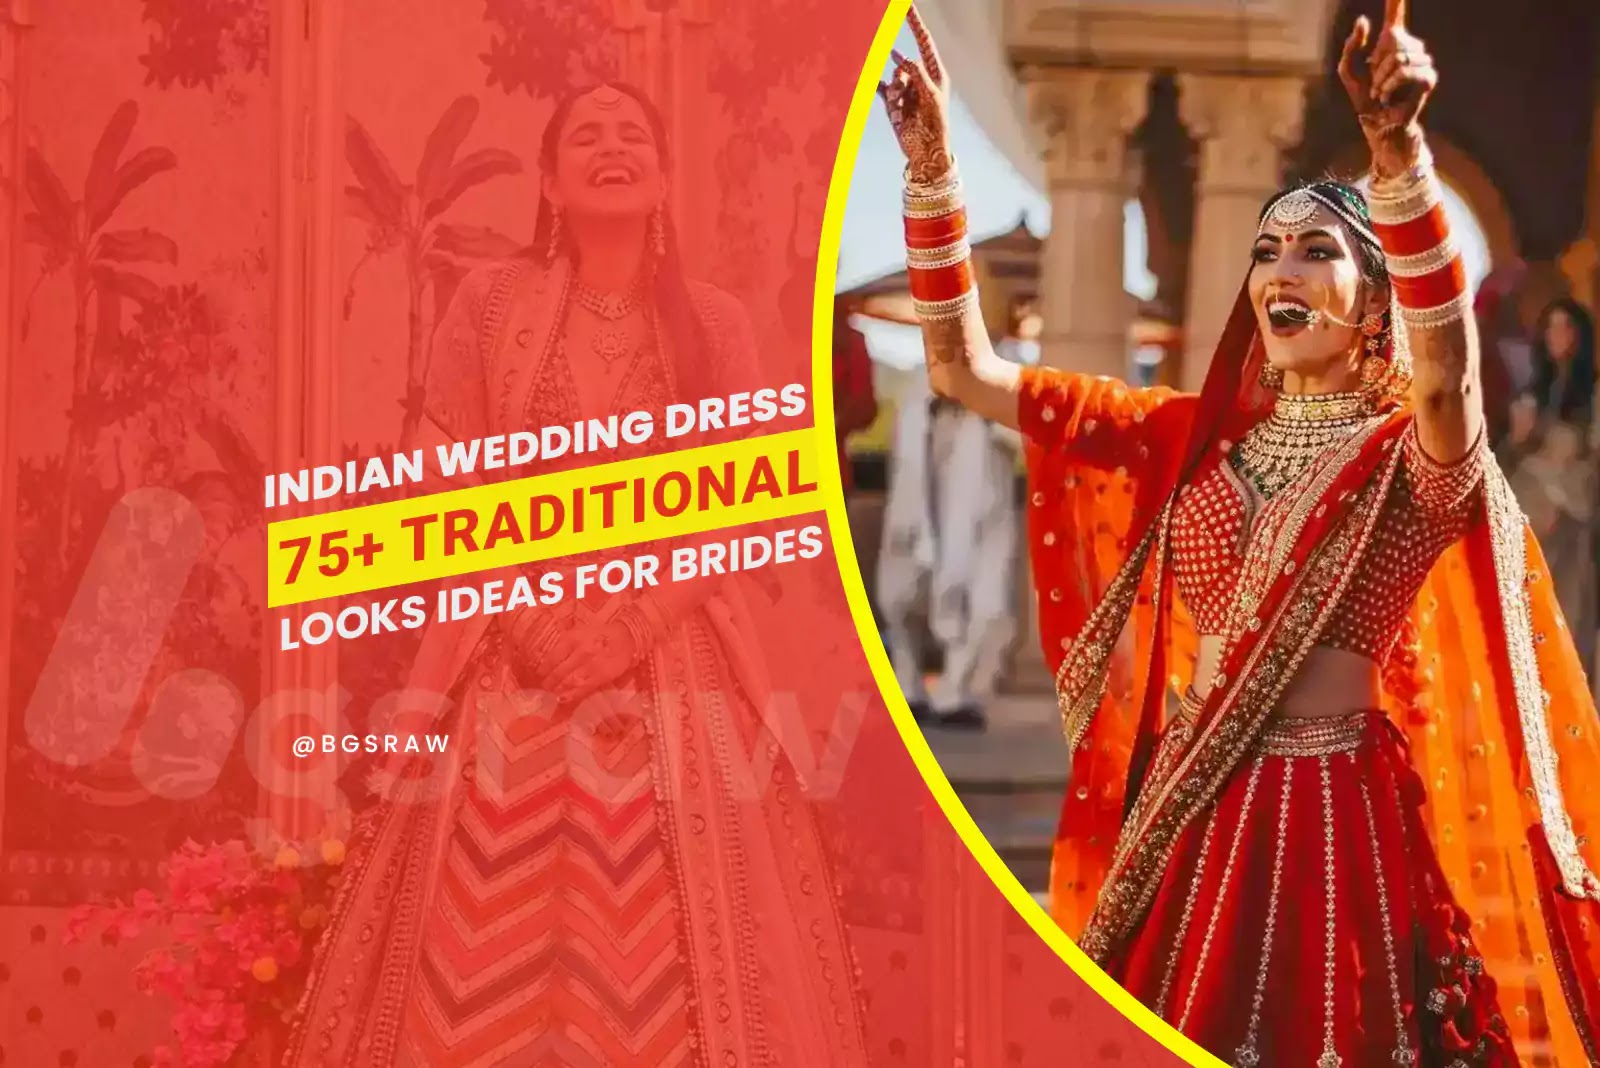 BgsRaw Fashion: Indian Wedding Dress Ideas: 75+ Traditional Looks for Brides